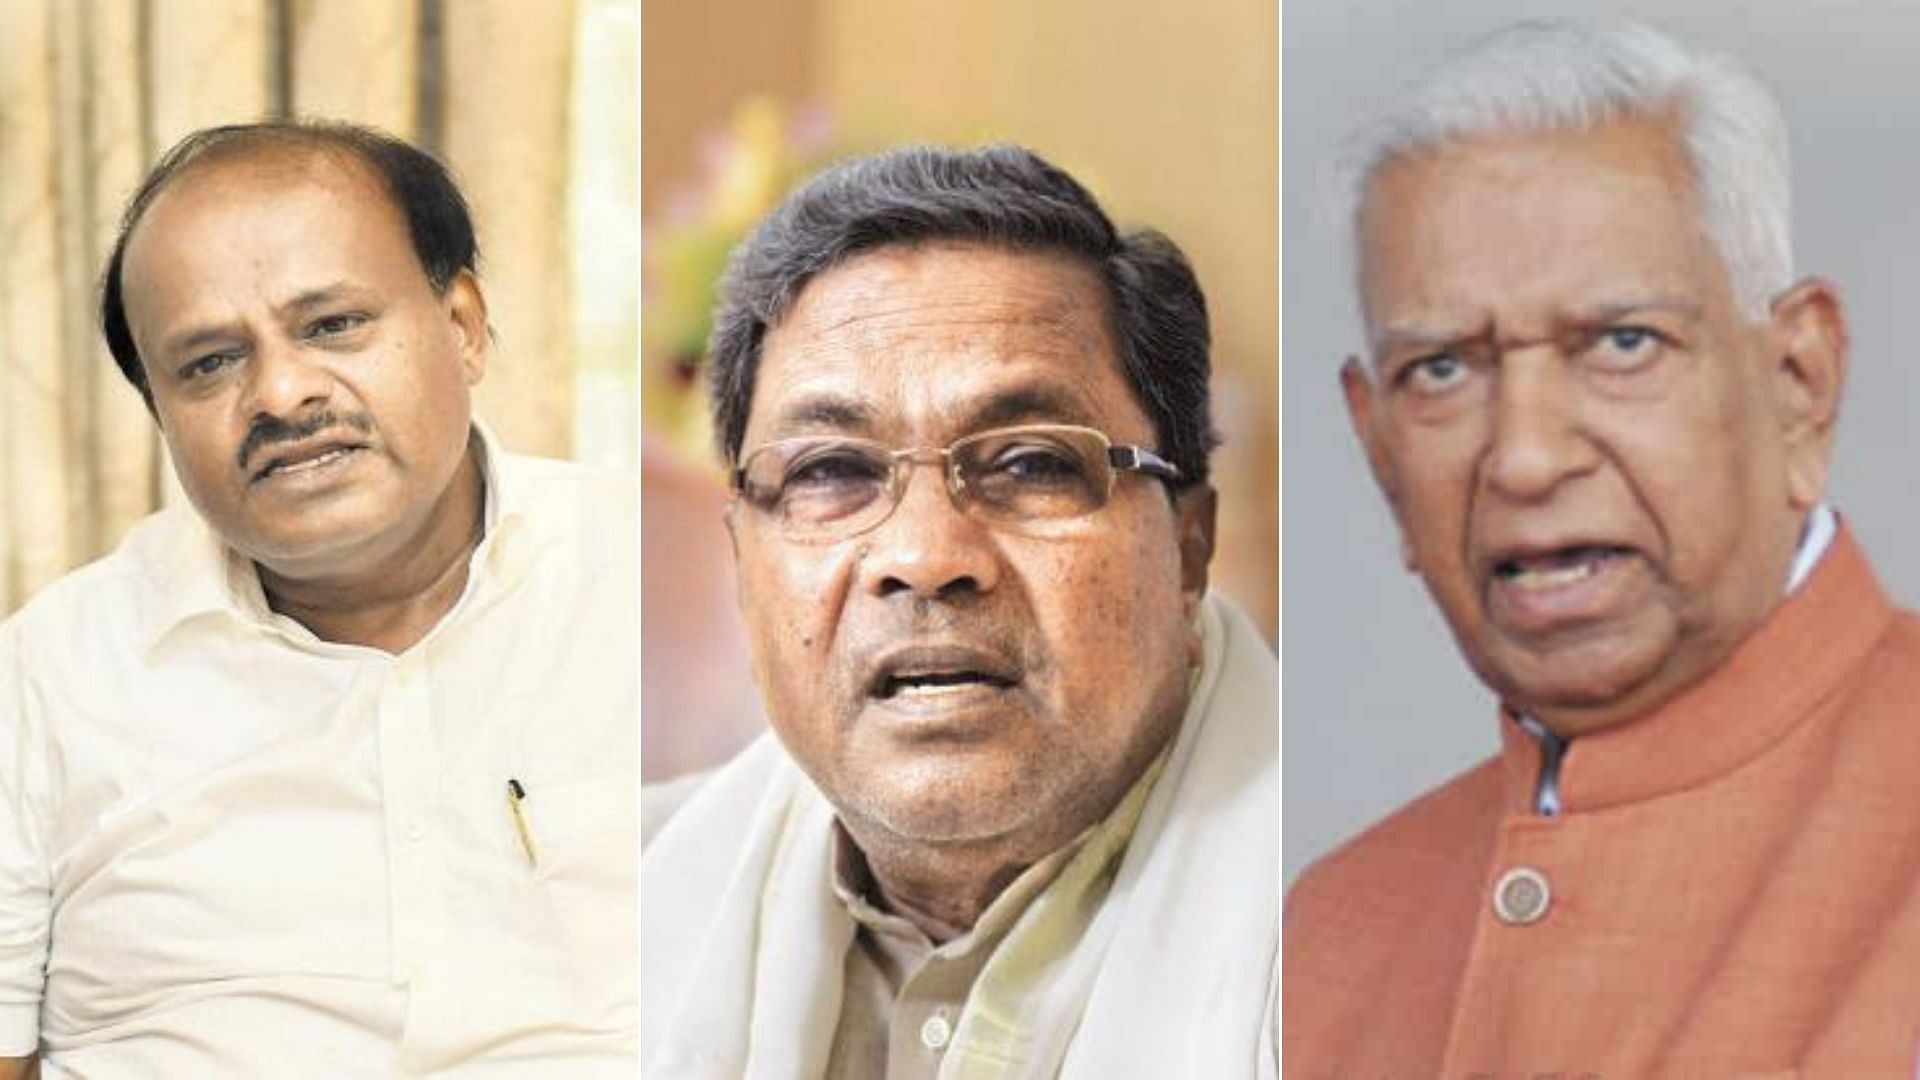 HD Kumaraswamy, Siddaramaiah and Vajubhai Vala.